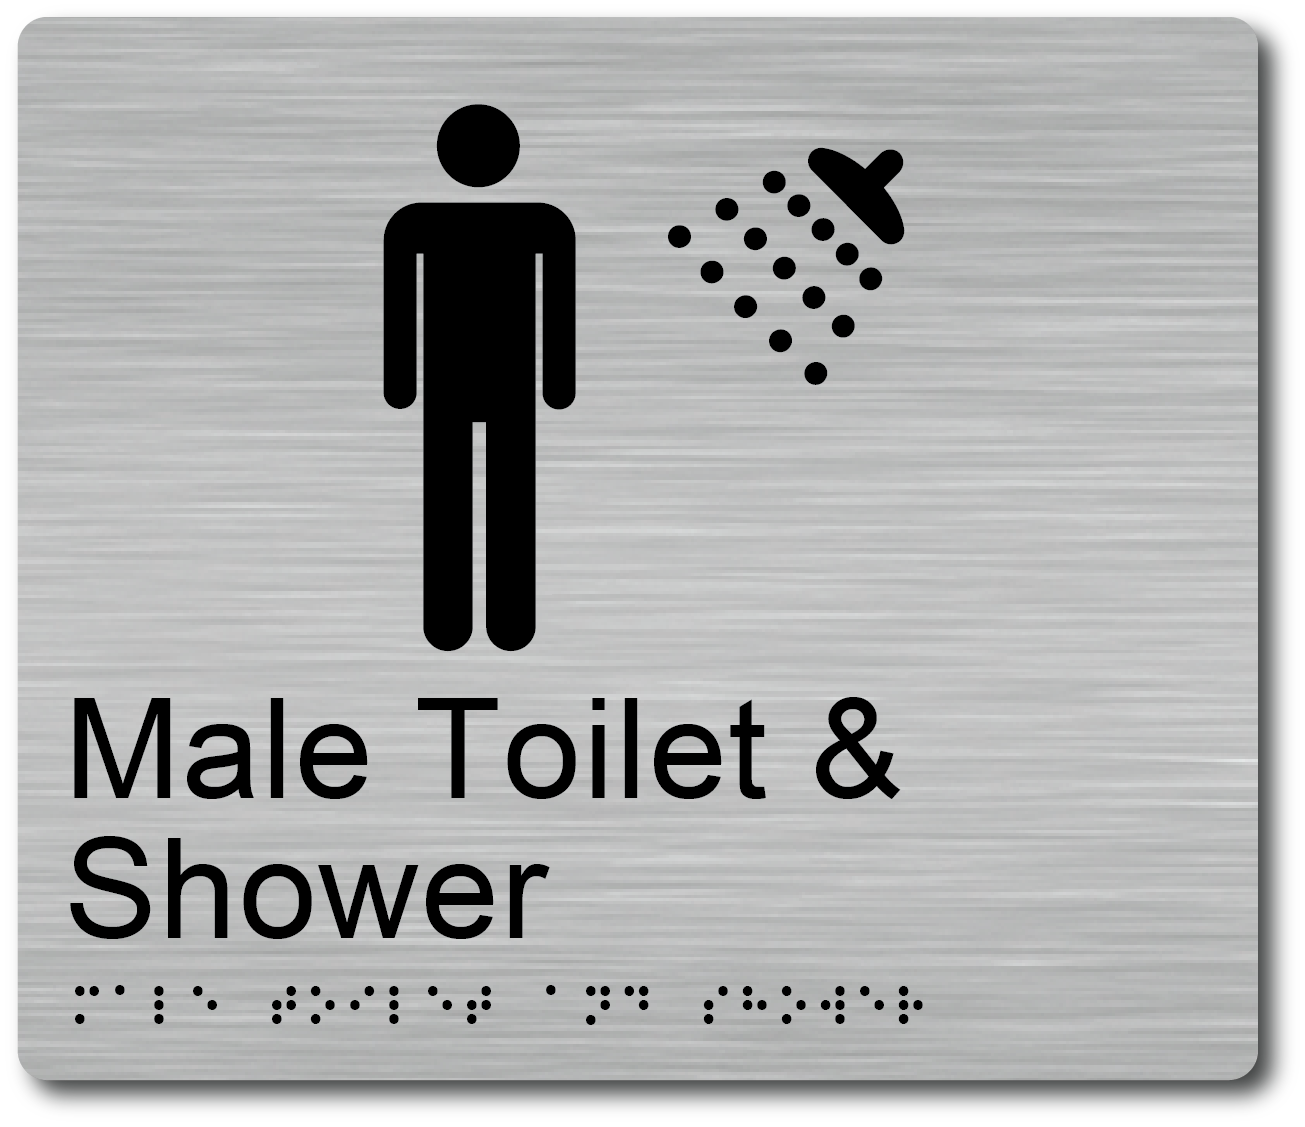 Male Toilet & Shower